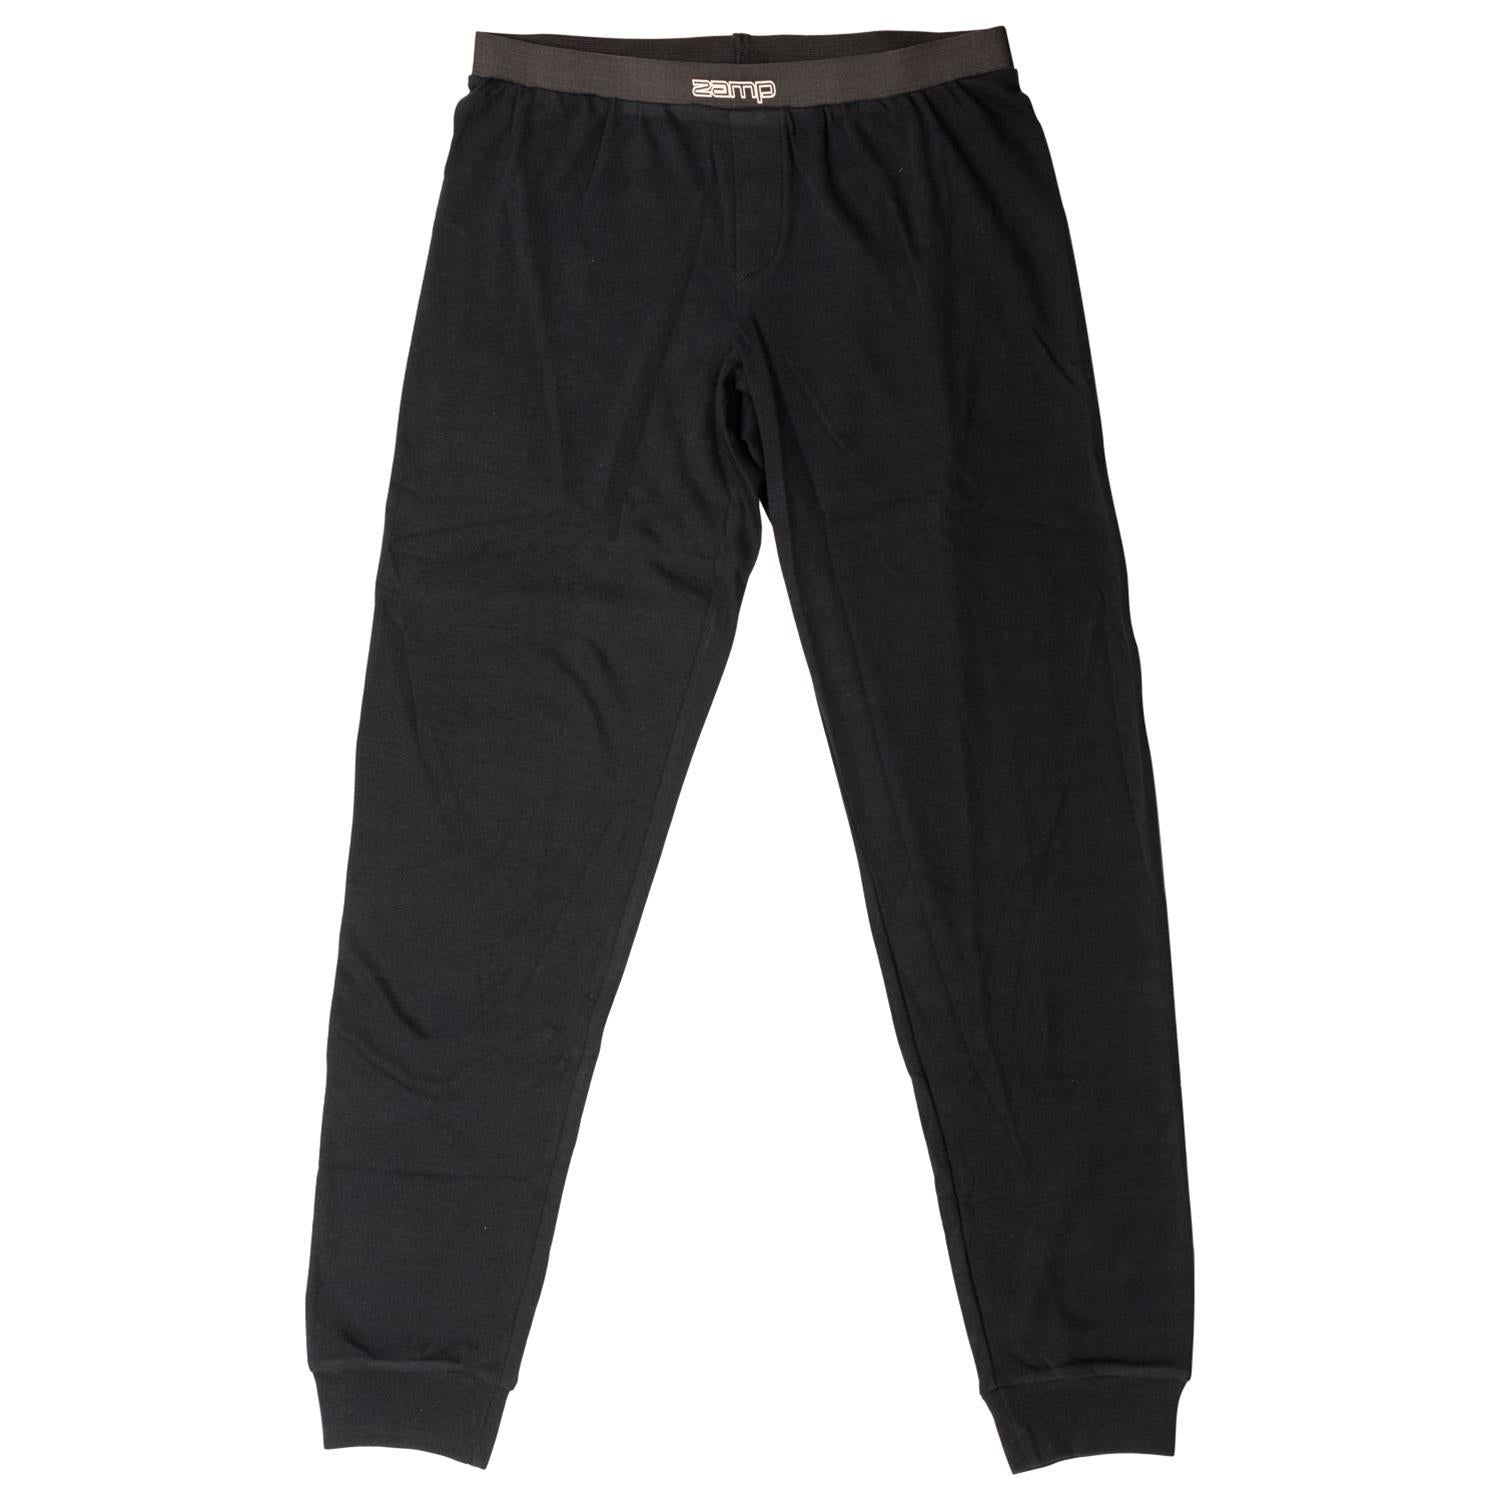 Zamp Solar Underwear Bottom Black XX-Large SFI 3.3 Safety Clothing Fire Retardant Underwear Bottoms main image